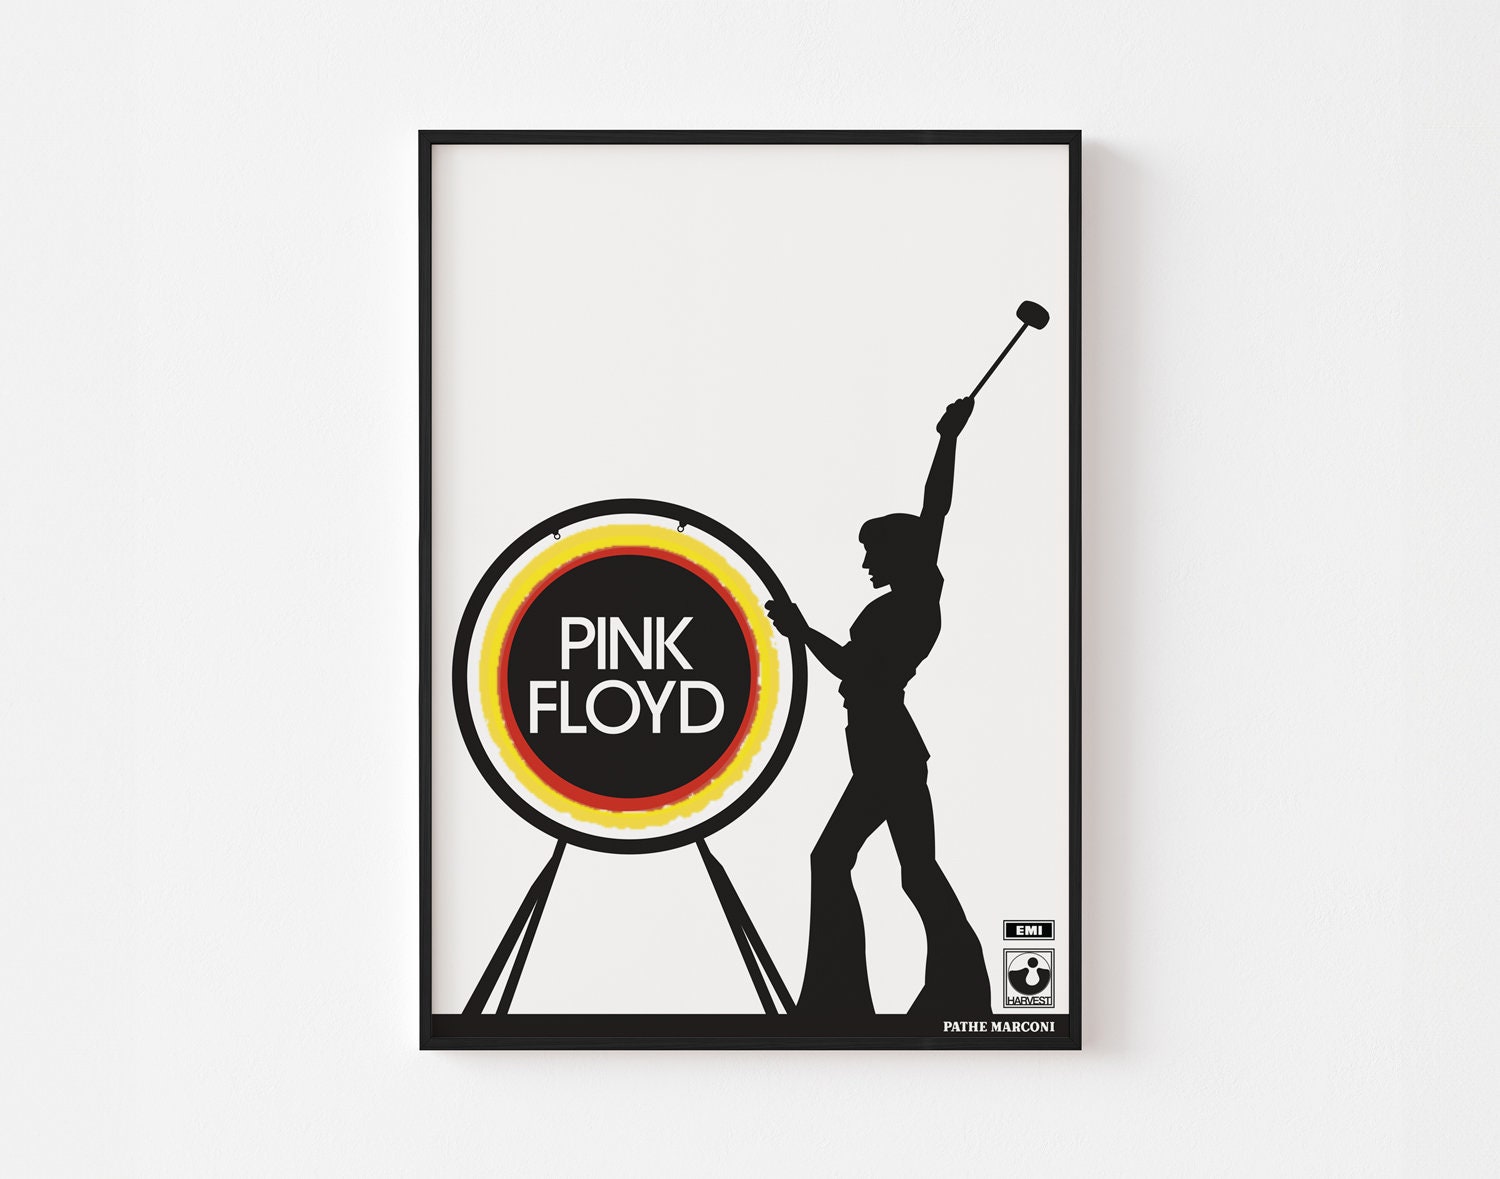 Pink Floyd Album Cover 1 English Music Rock Band Poster Barrett